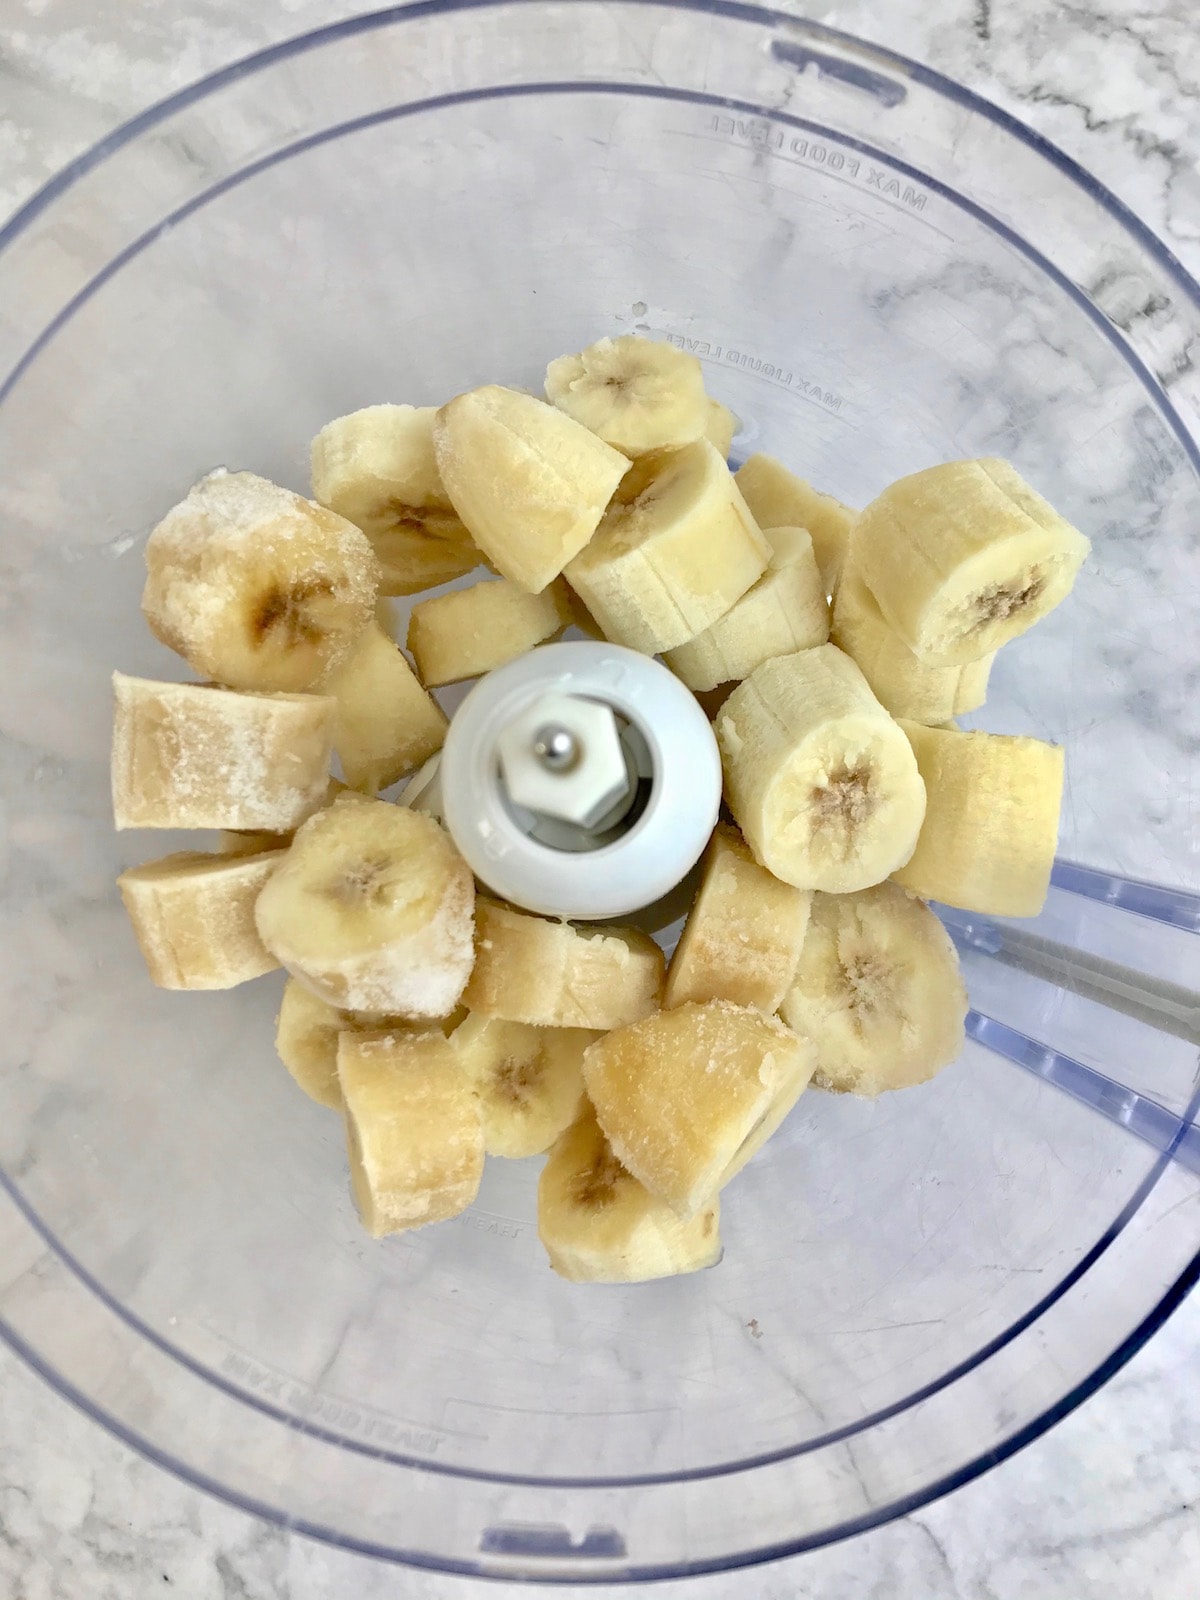 Frozen banana pieces in a food processor.